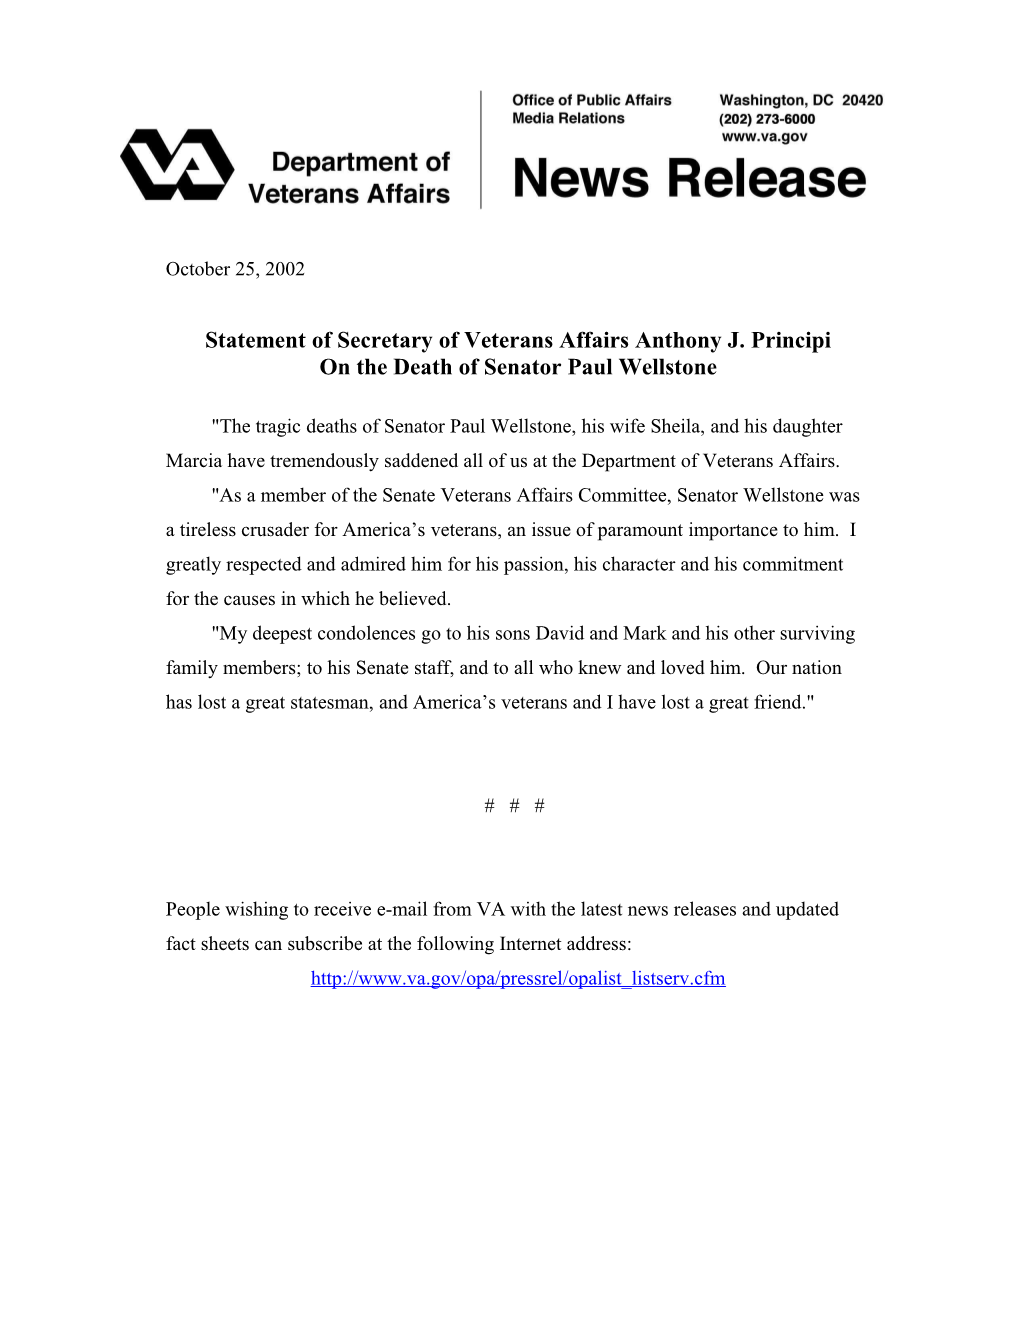 Statement of Secretary of Veterans Affairs Anthony J. Principi